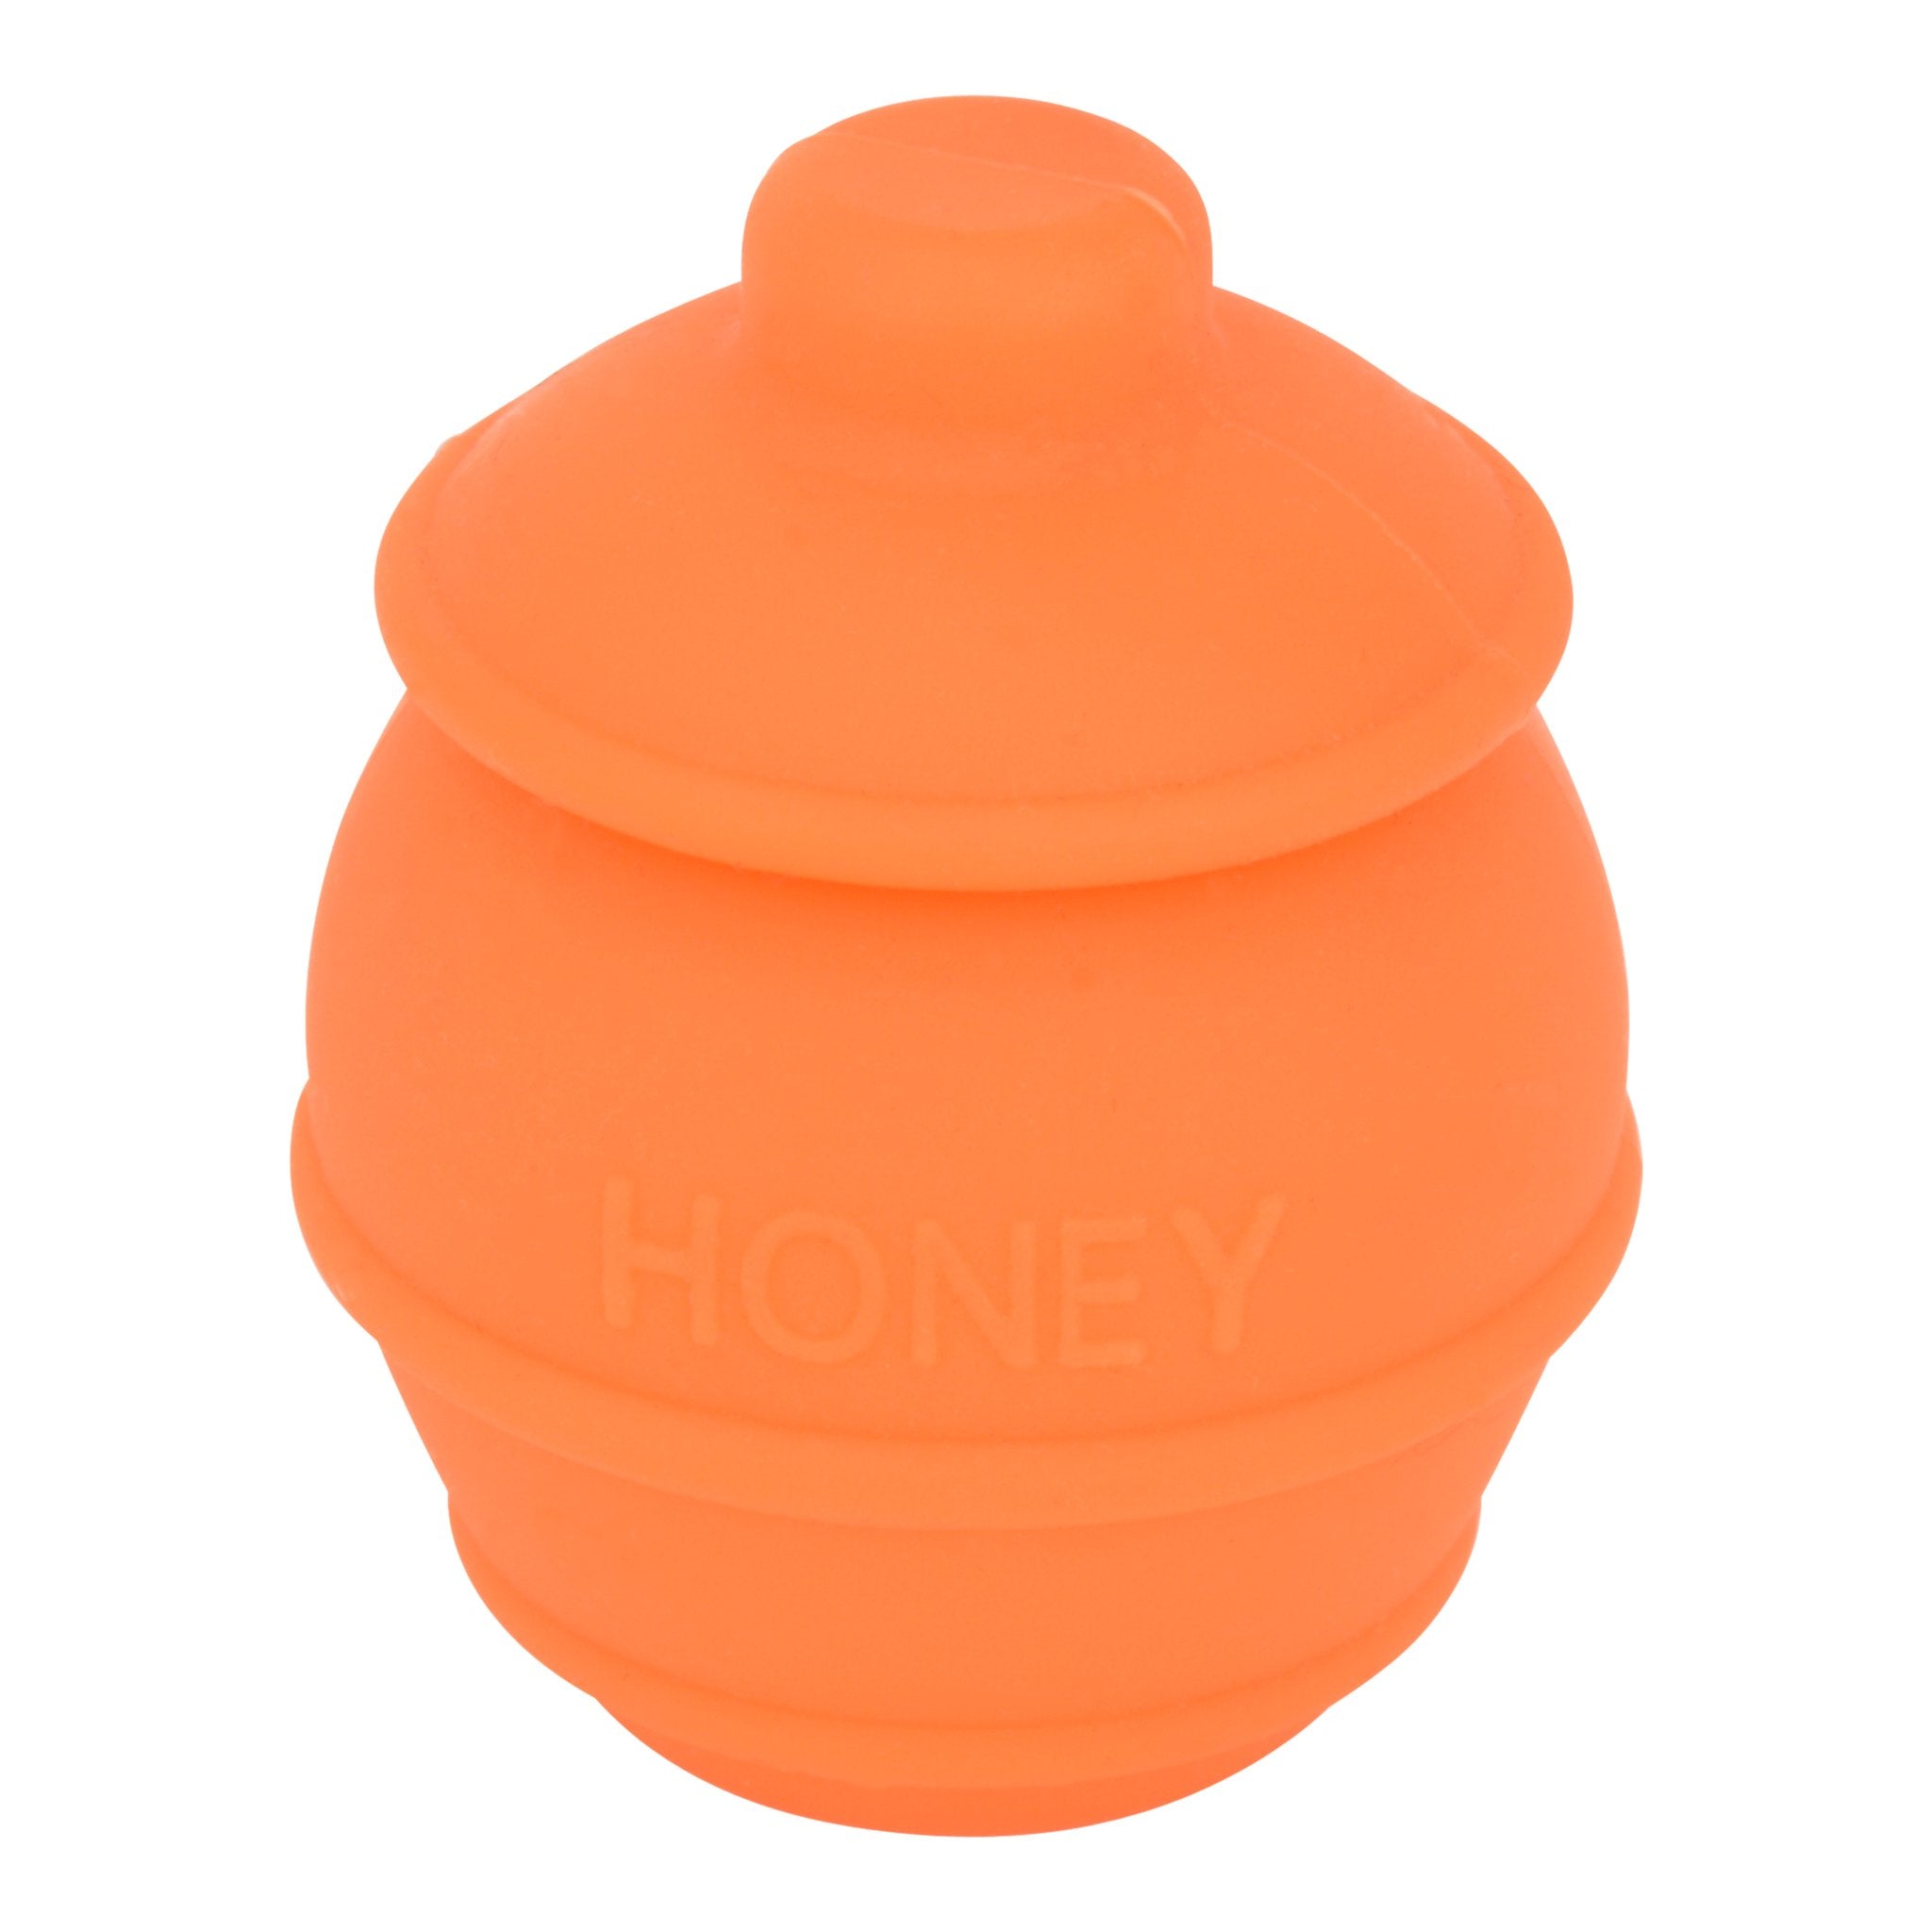 Honey Pot Wax Container Orange